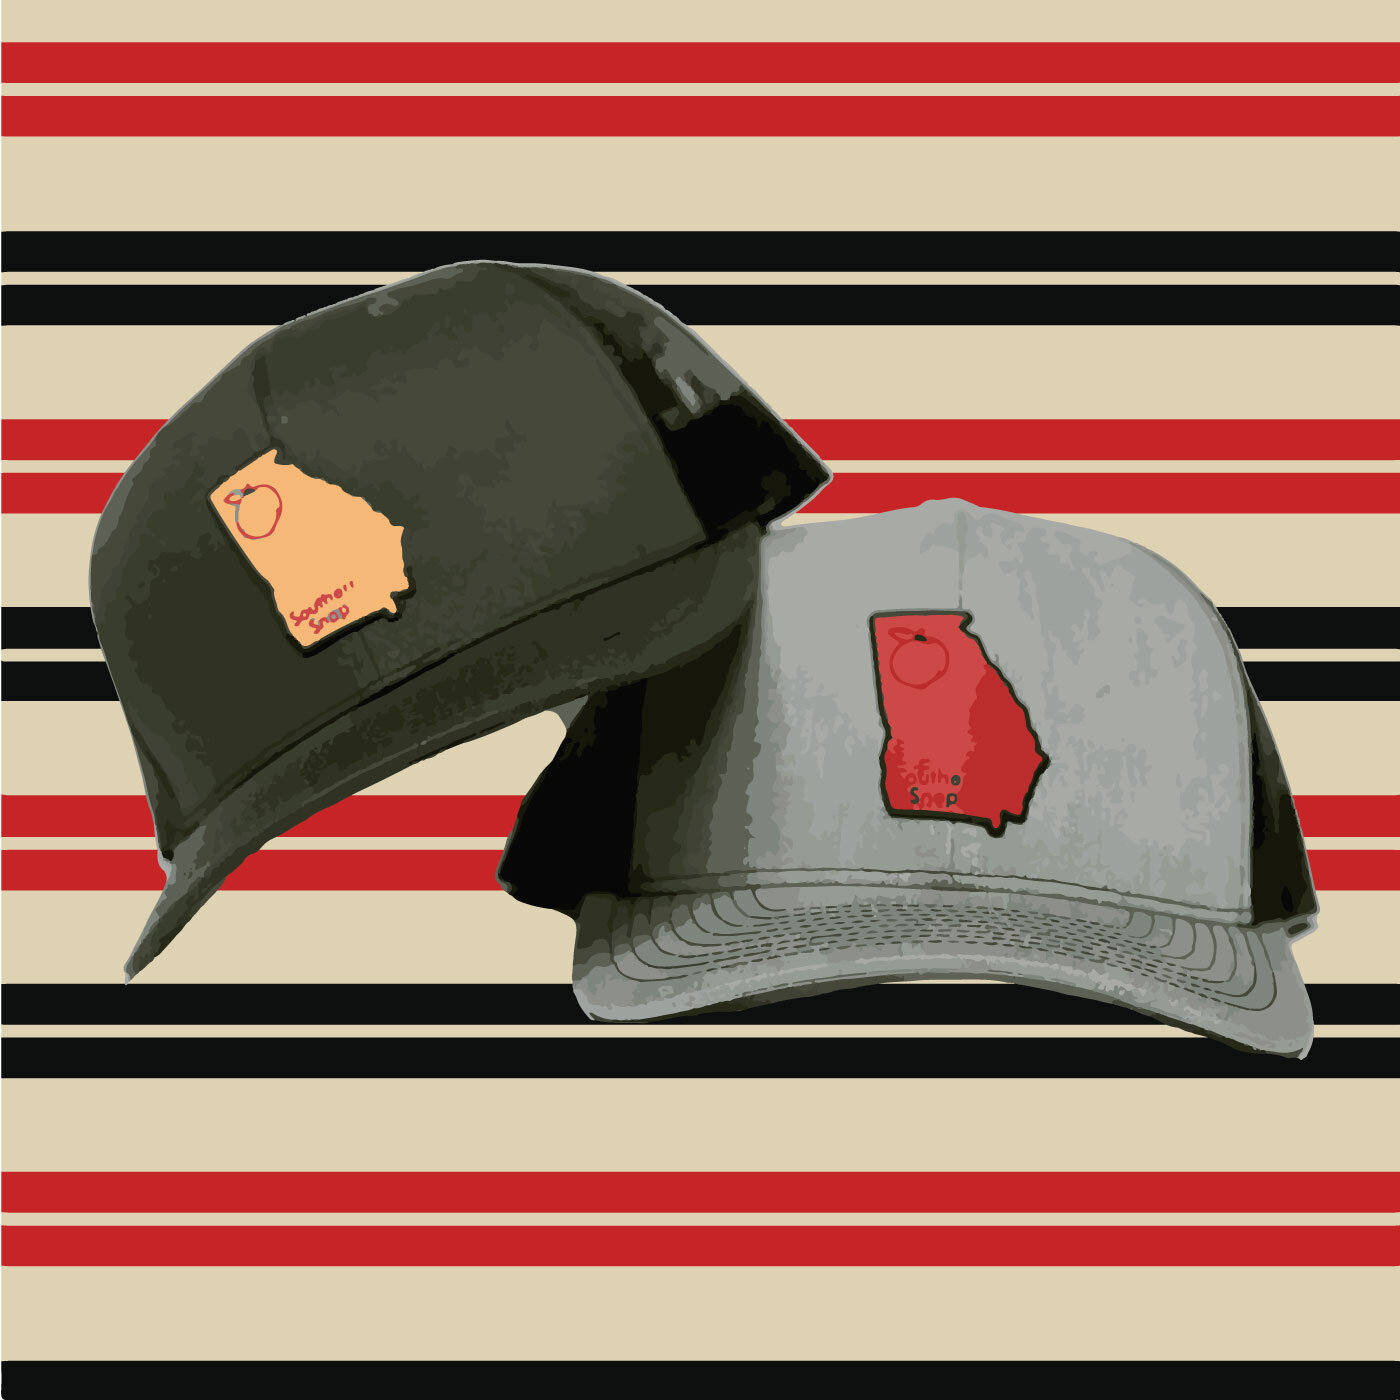 Reagan Bush '84 Leather Patch Hat ( 5 Hat Colors ) — Southern Snap Co.